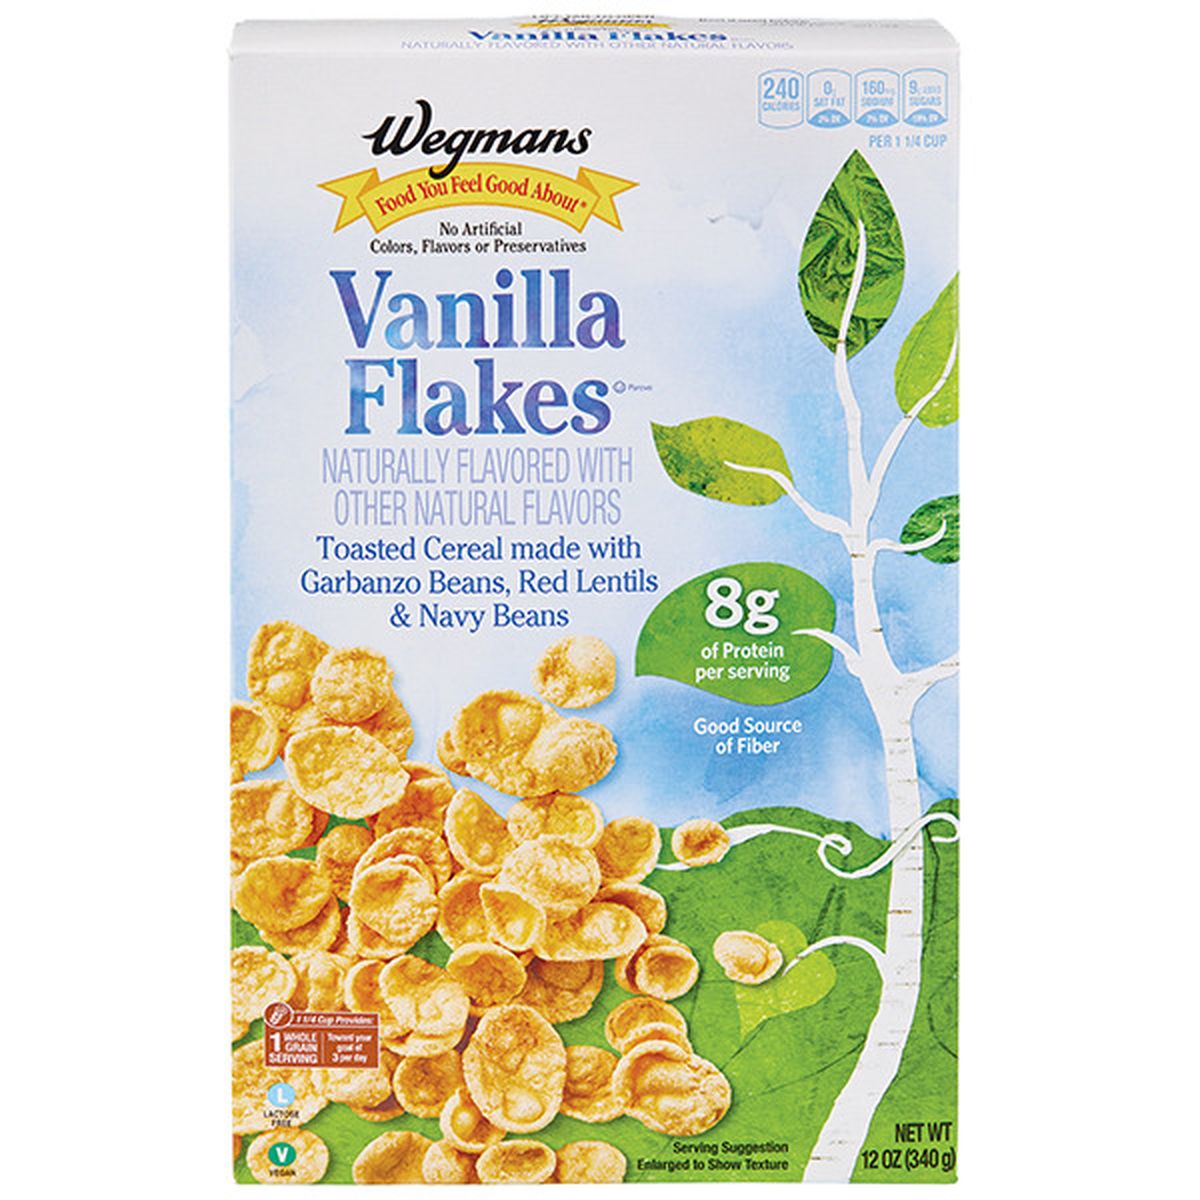 Calories in Wegmans Vanilla Flakes Cereal